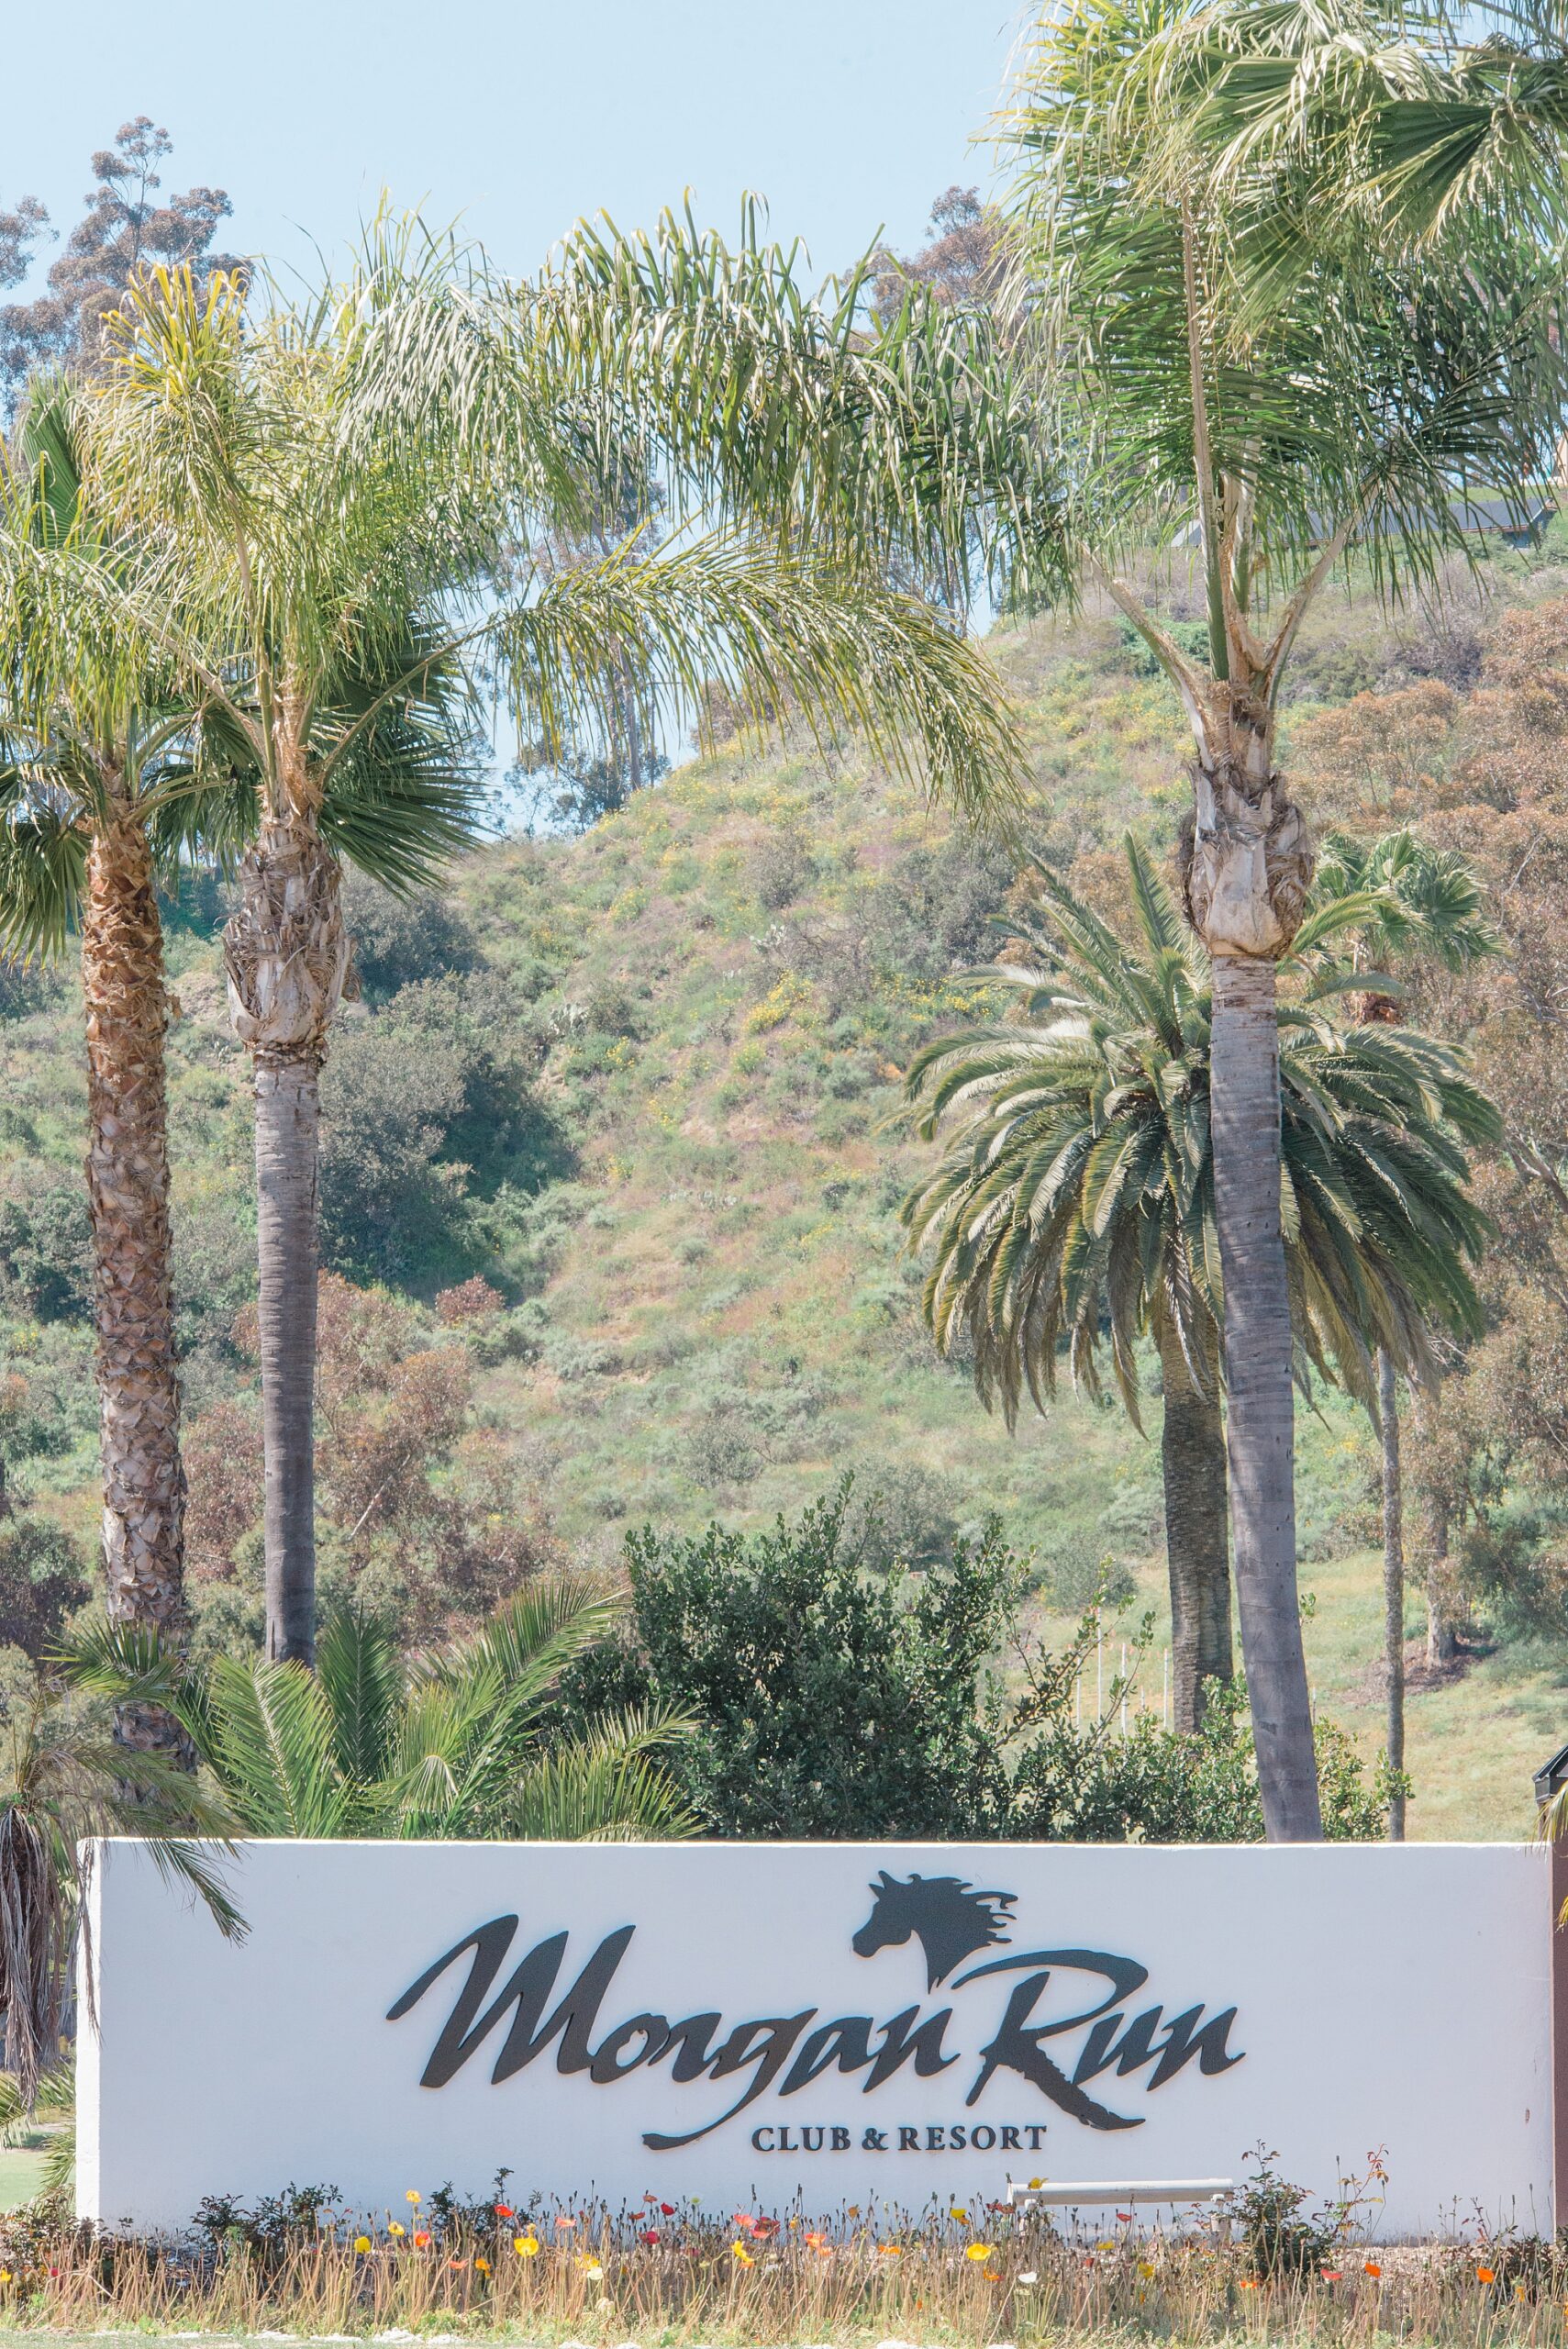 Morgan Run Club & Resort in California